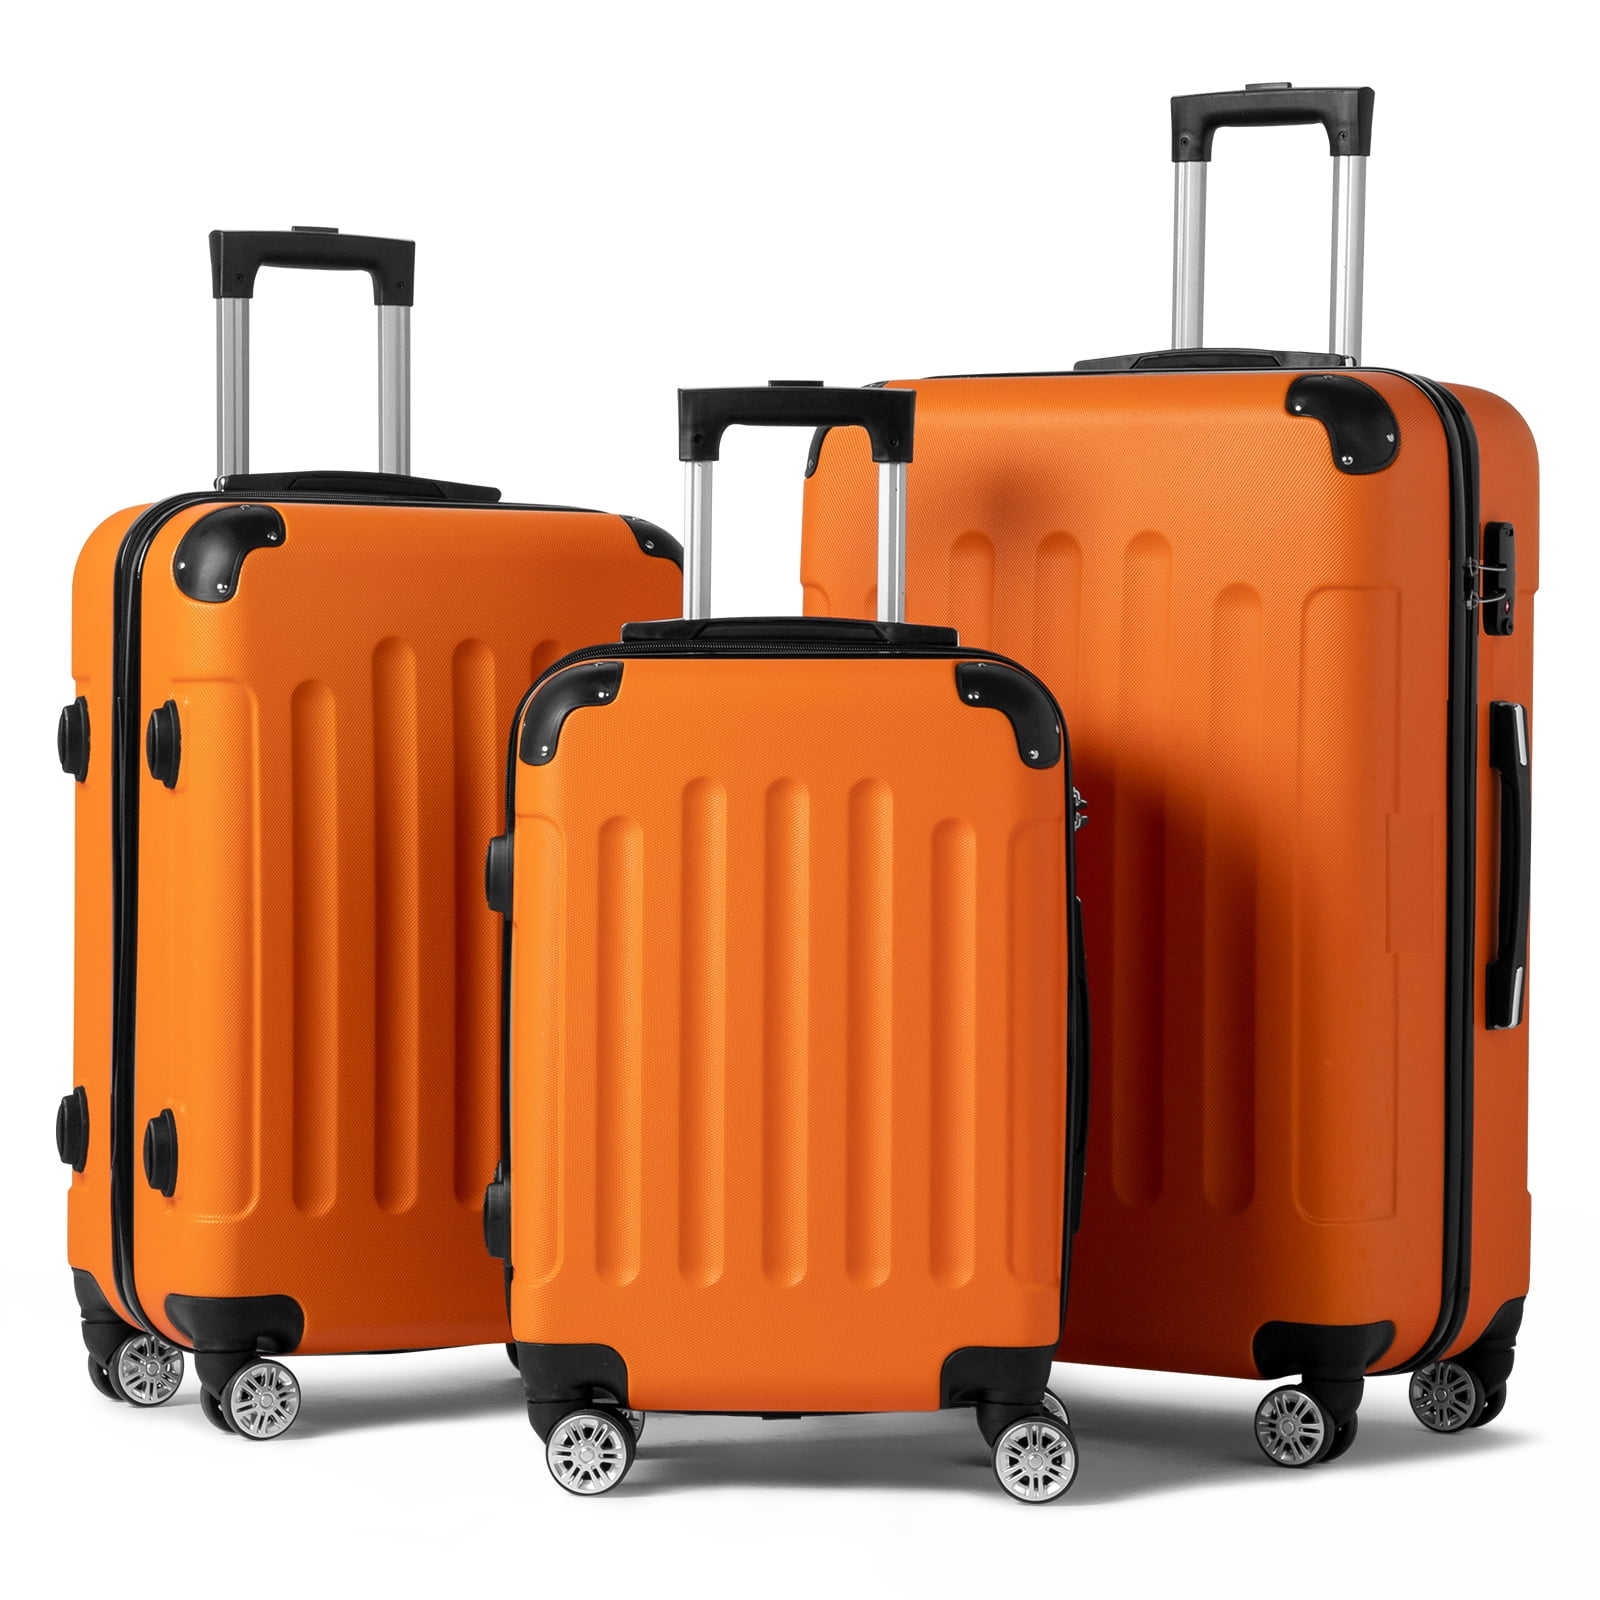 3 Piece Luggage Set With TSA Locks (7 Colors) $89.99 at Zimtown via Walmart